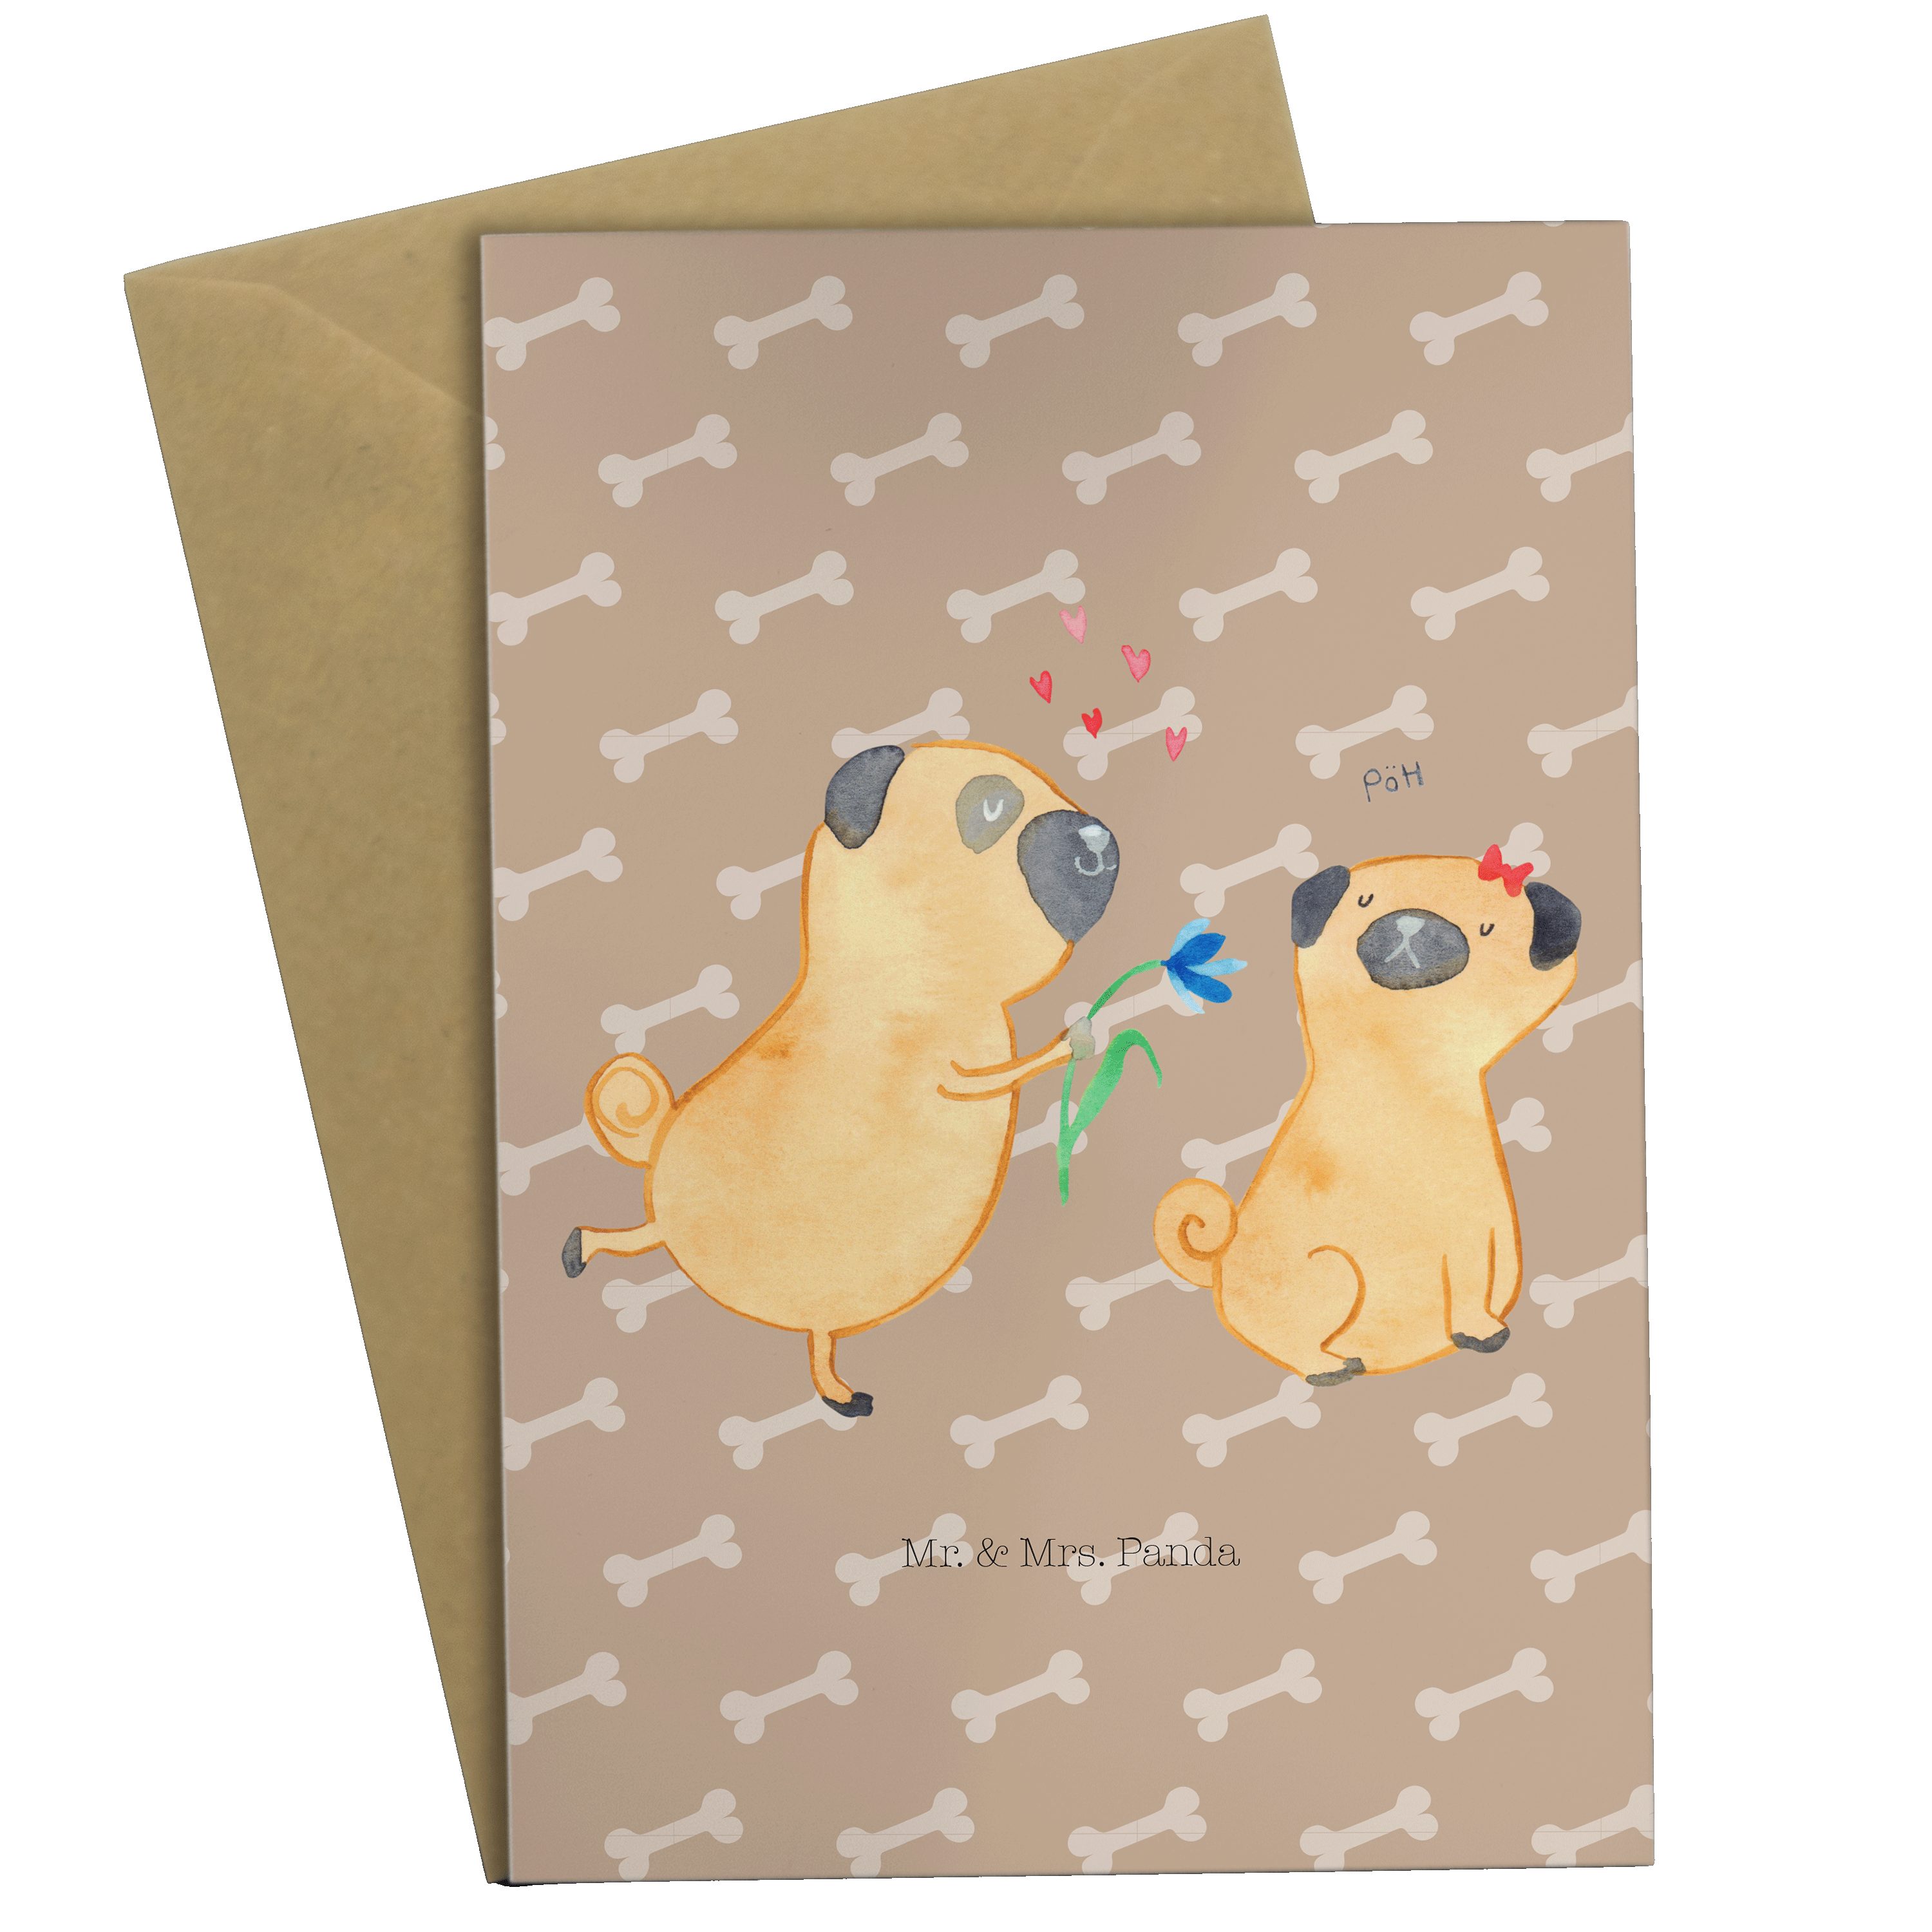 Mr. & Mrs. Panda Grußkarte Mops verliebt - Hundeglück - Geschenk, Möpse, Sprüche, Hundeliebe, Li